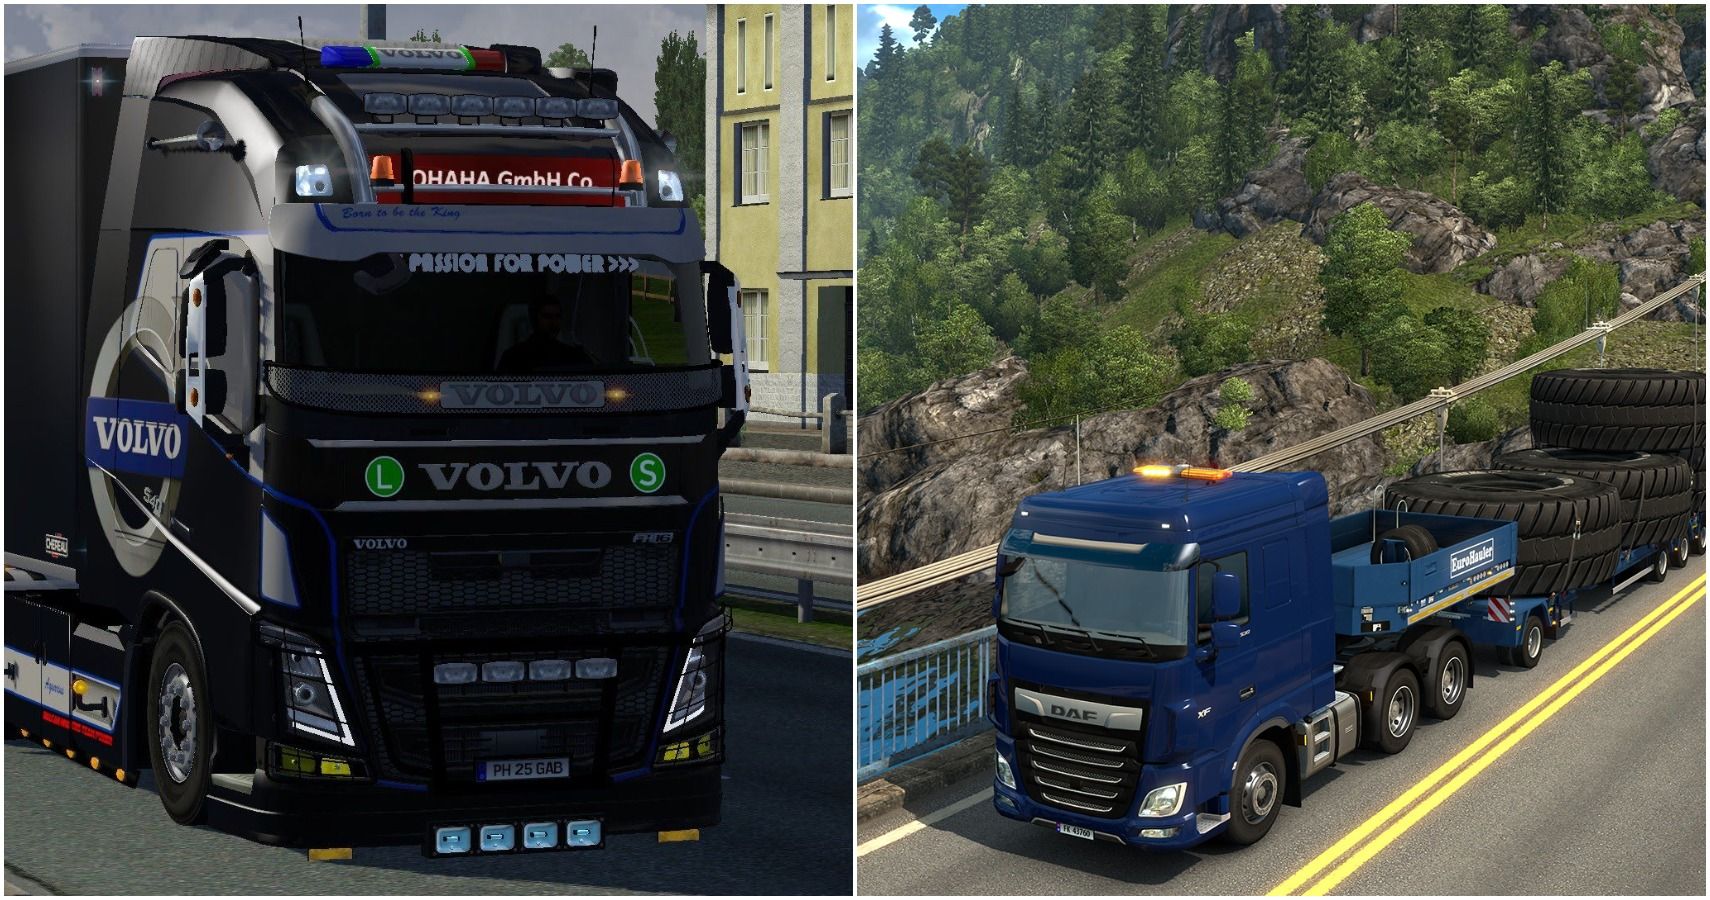 https://static1.thegamerimages.com/wordpress/wp-content/uploads/2020/01/Euro-Truck-Simulator-2-reasons-feature.jpg